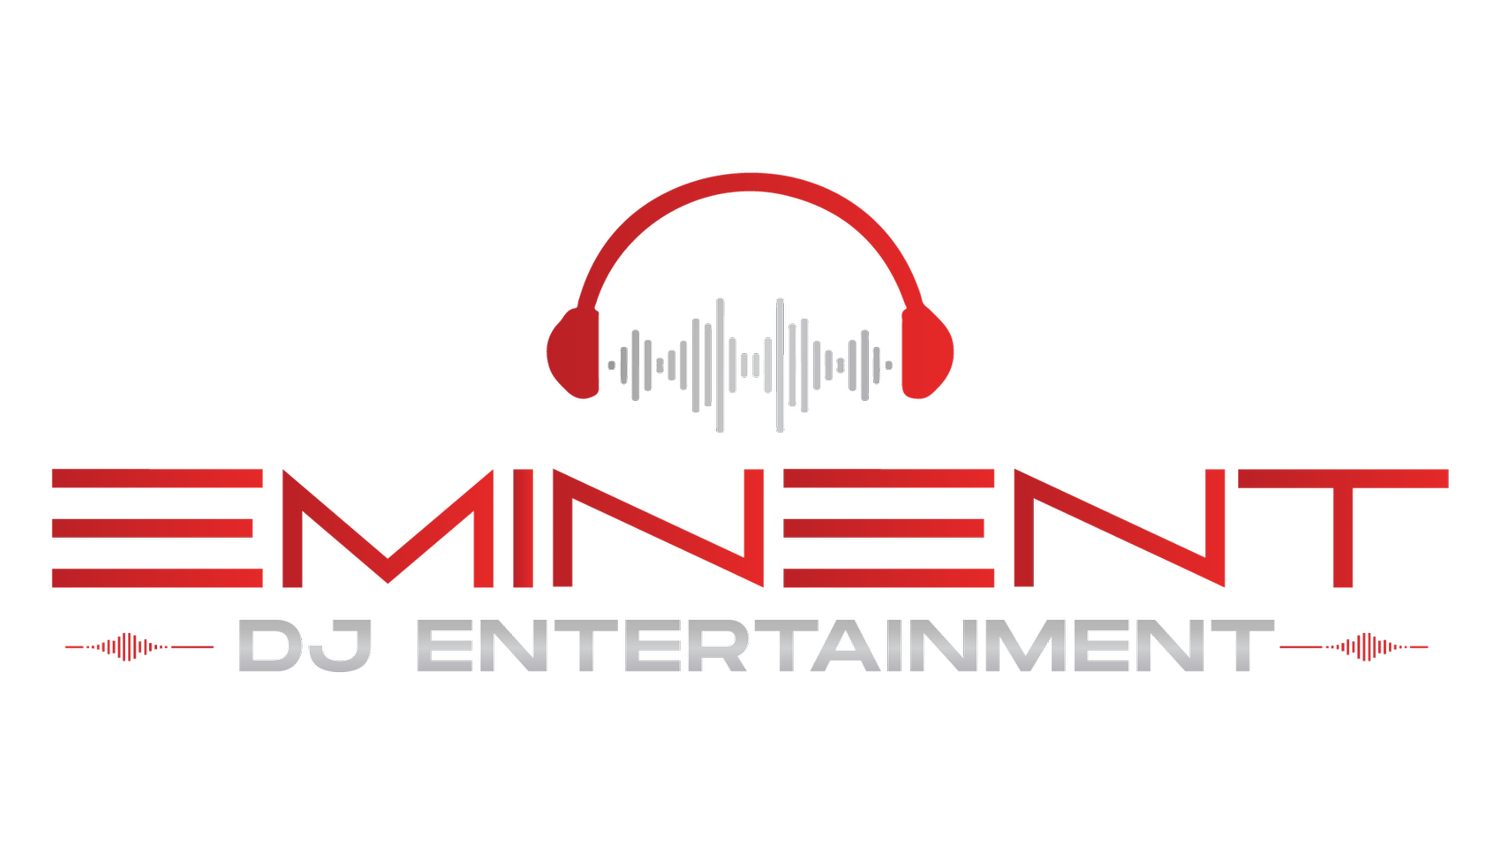 Eminent DJ Entertainment